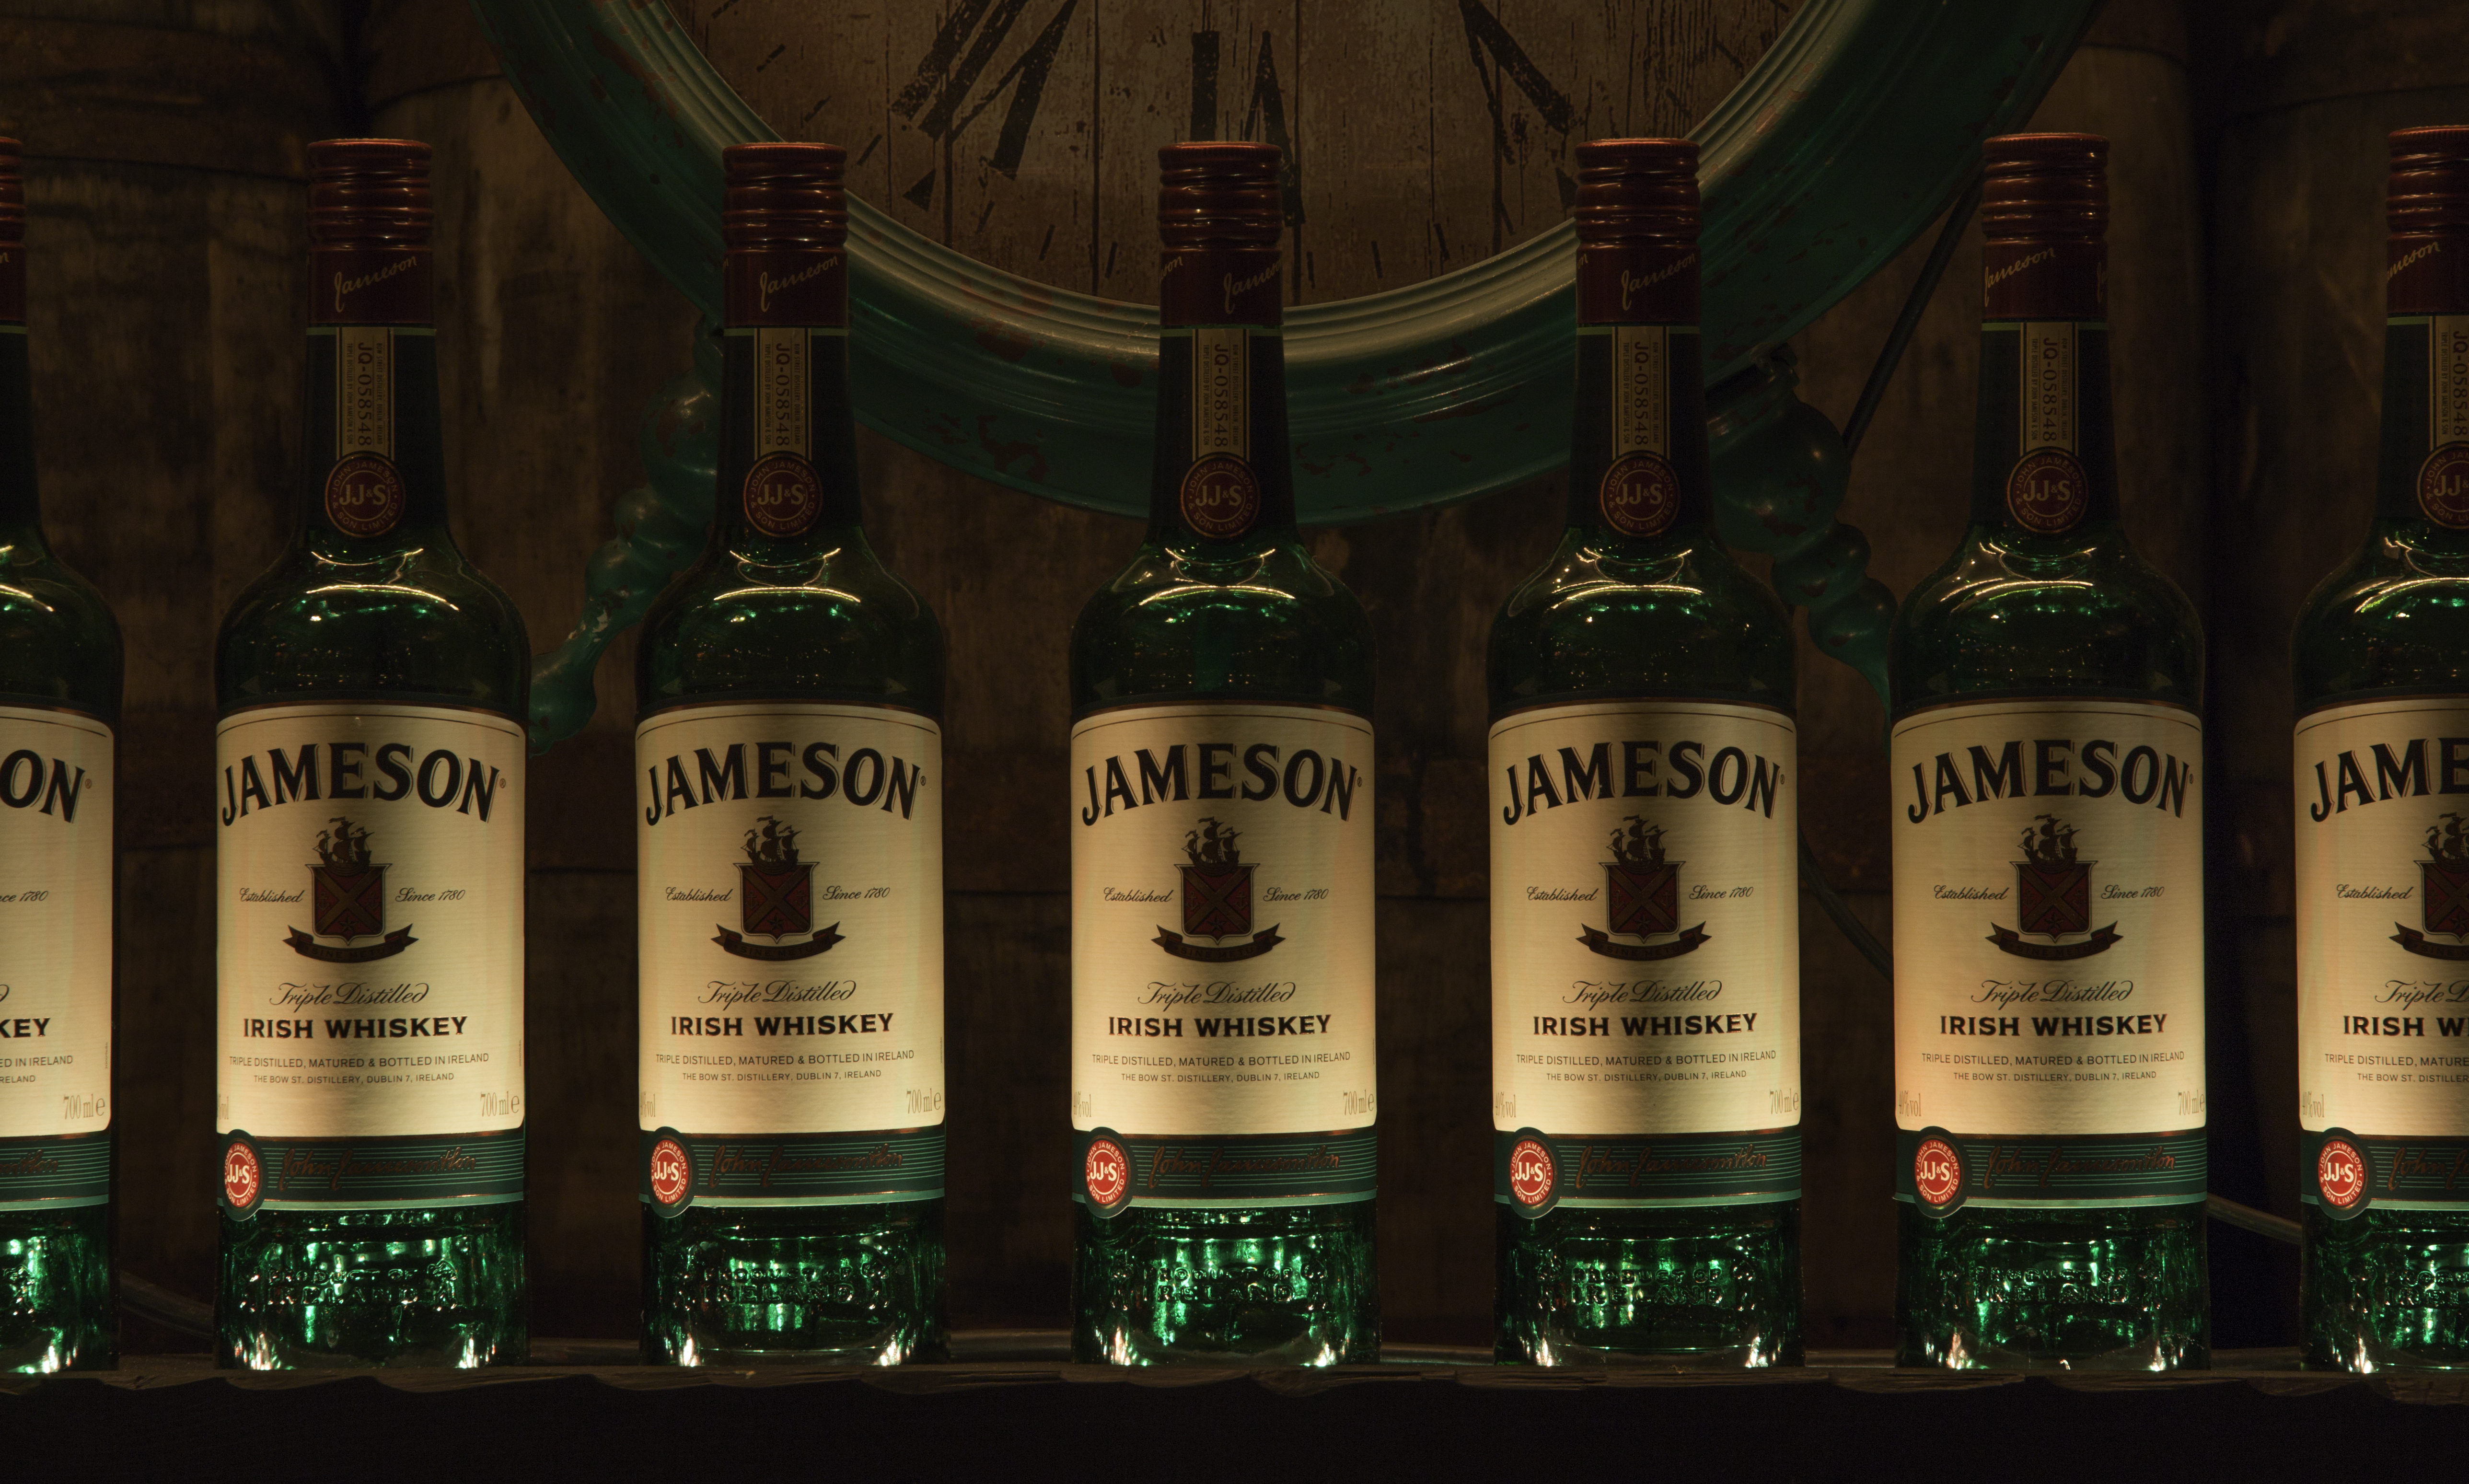 Jameson Irish Whiskey bottles on display at the Midleton Distillery in Ireland. Photo ©2014, Mark Gillespie/CaskStrength Media.